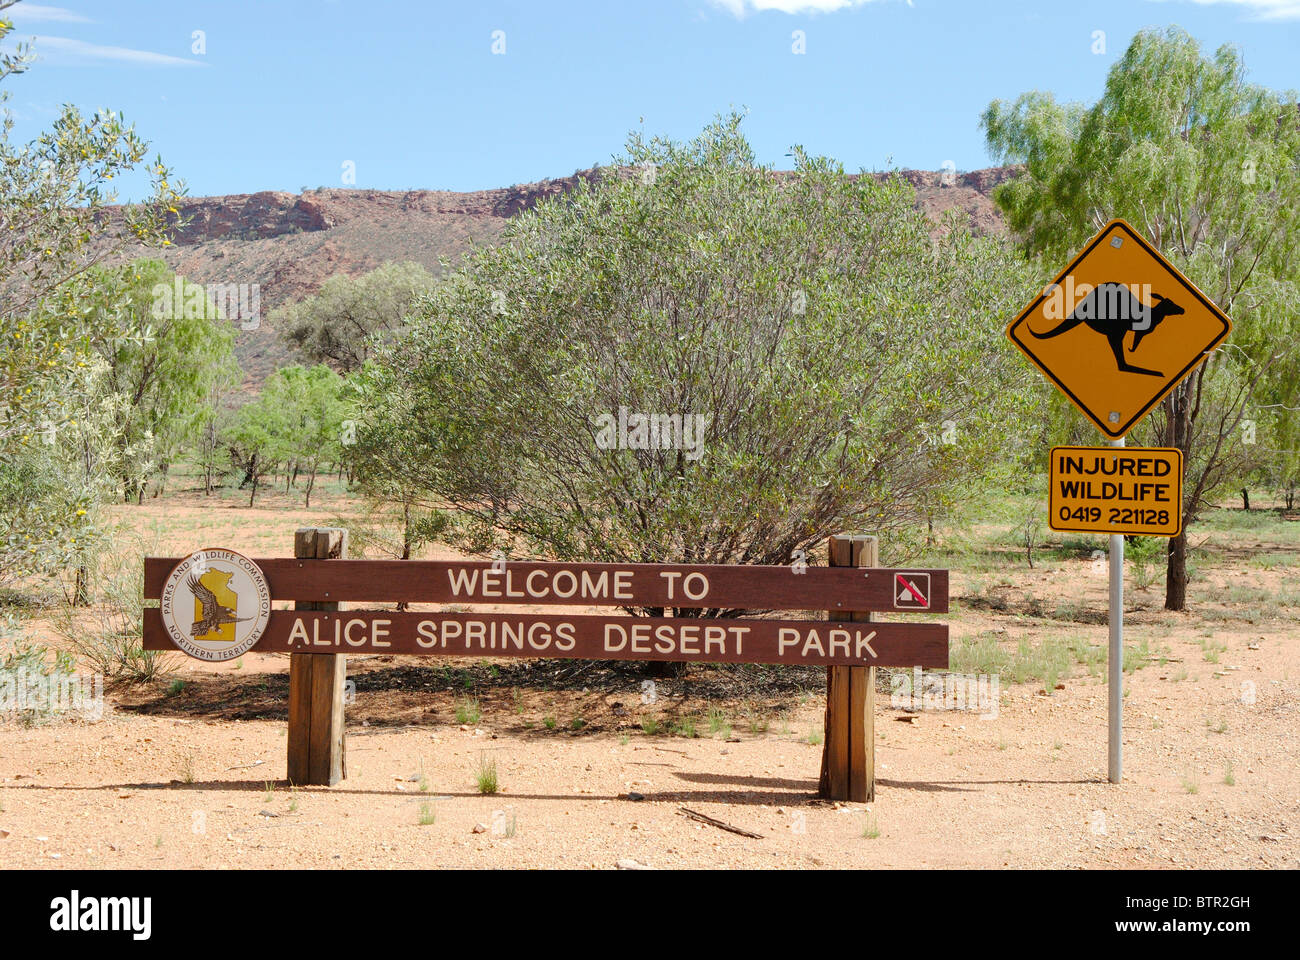 Australien, Alice Springs Desert Park Eingang Zeichen Stockfoto